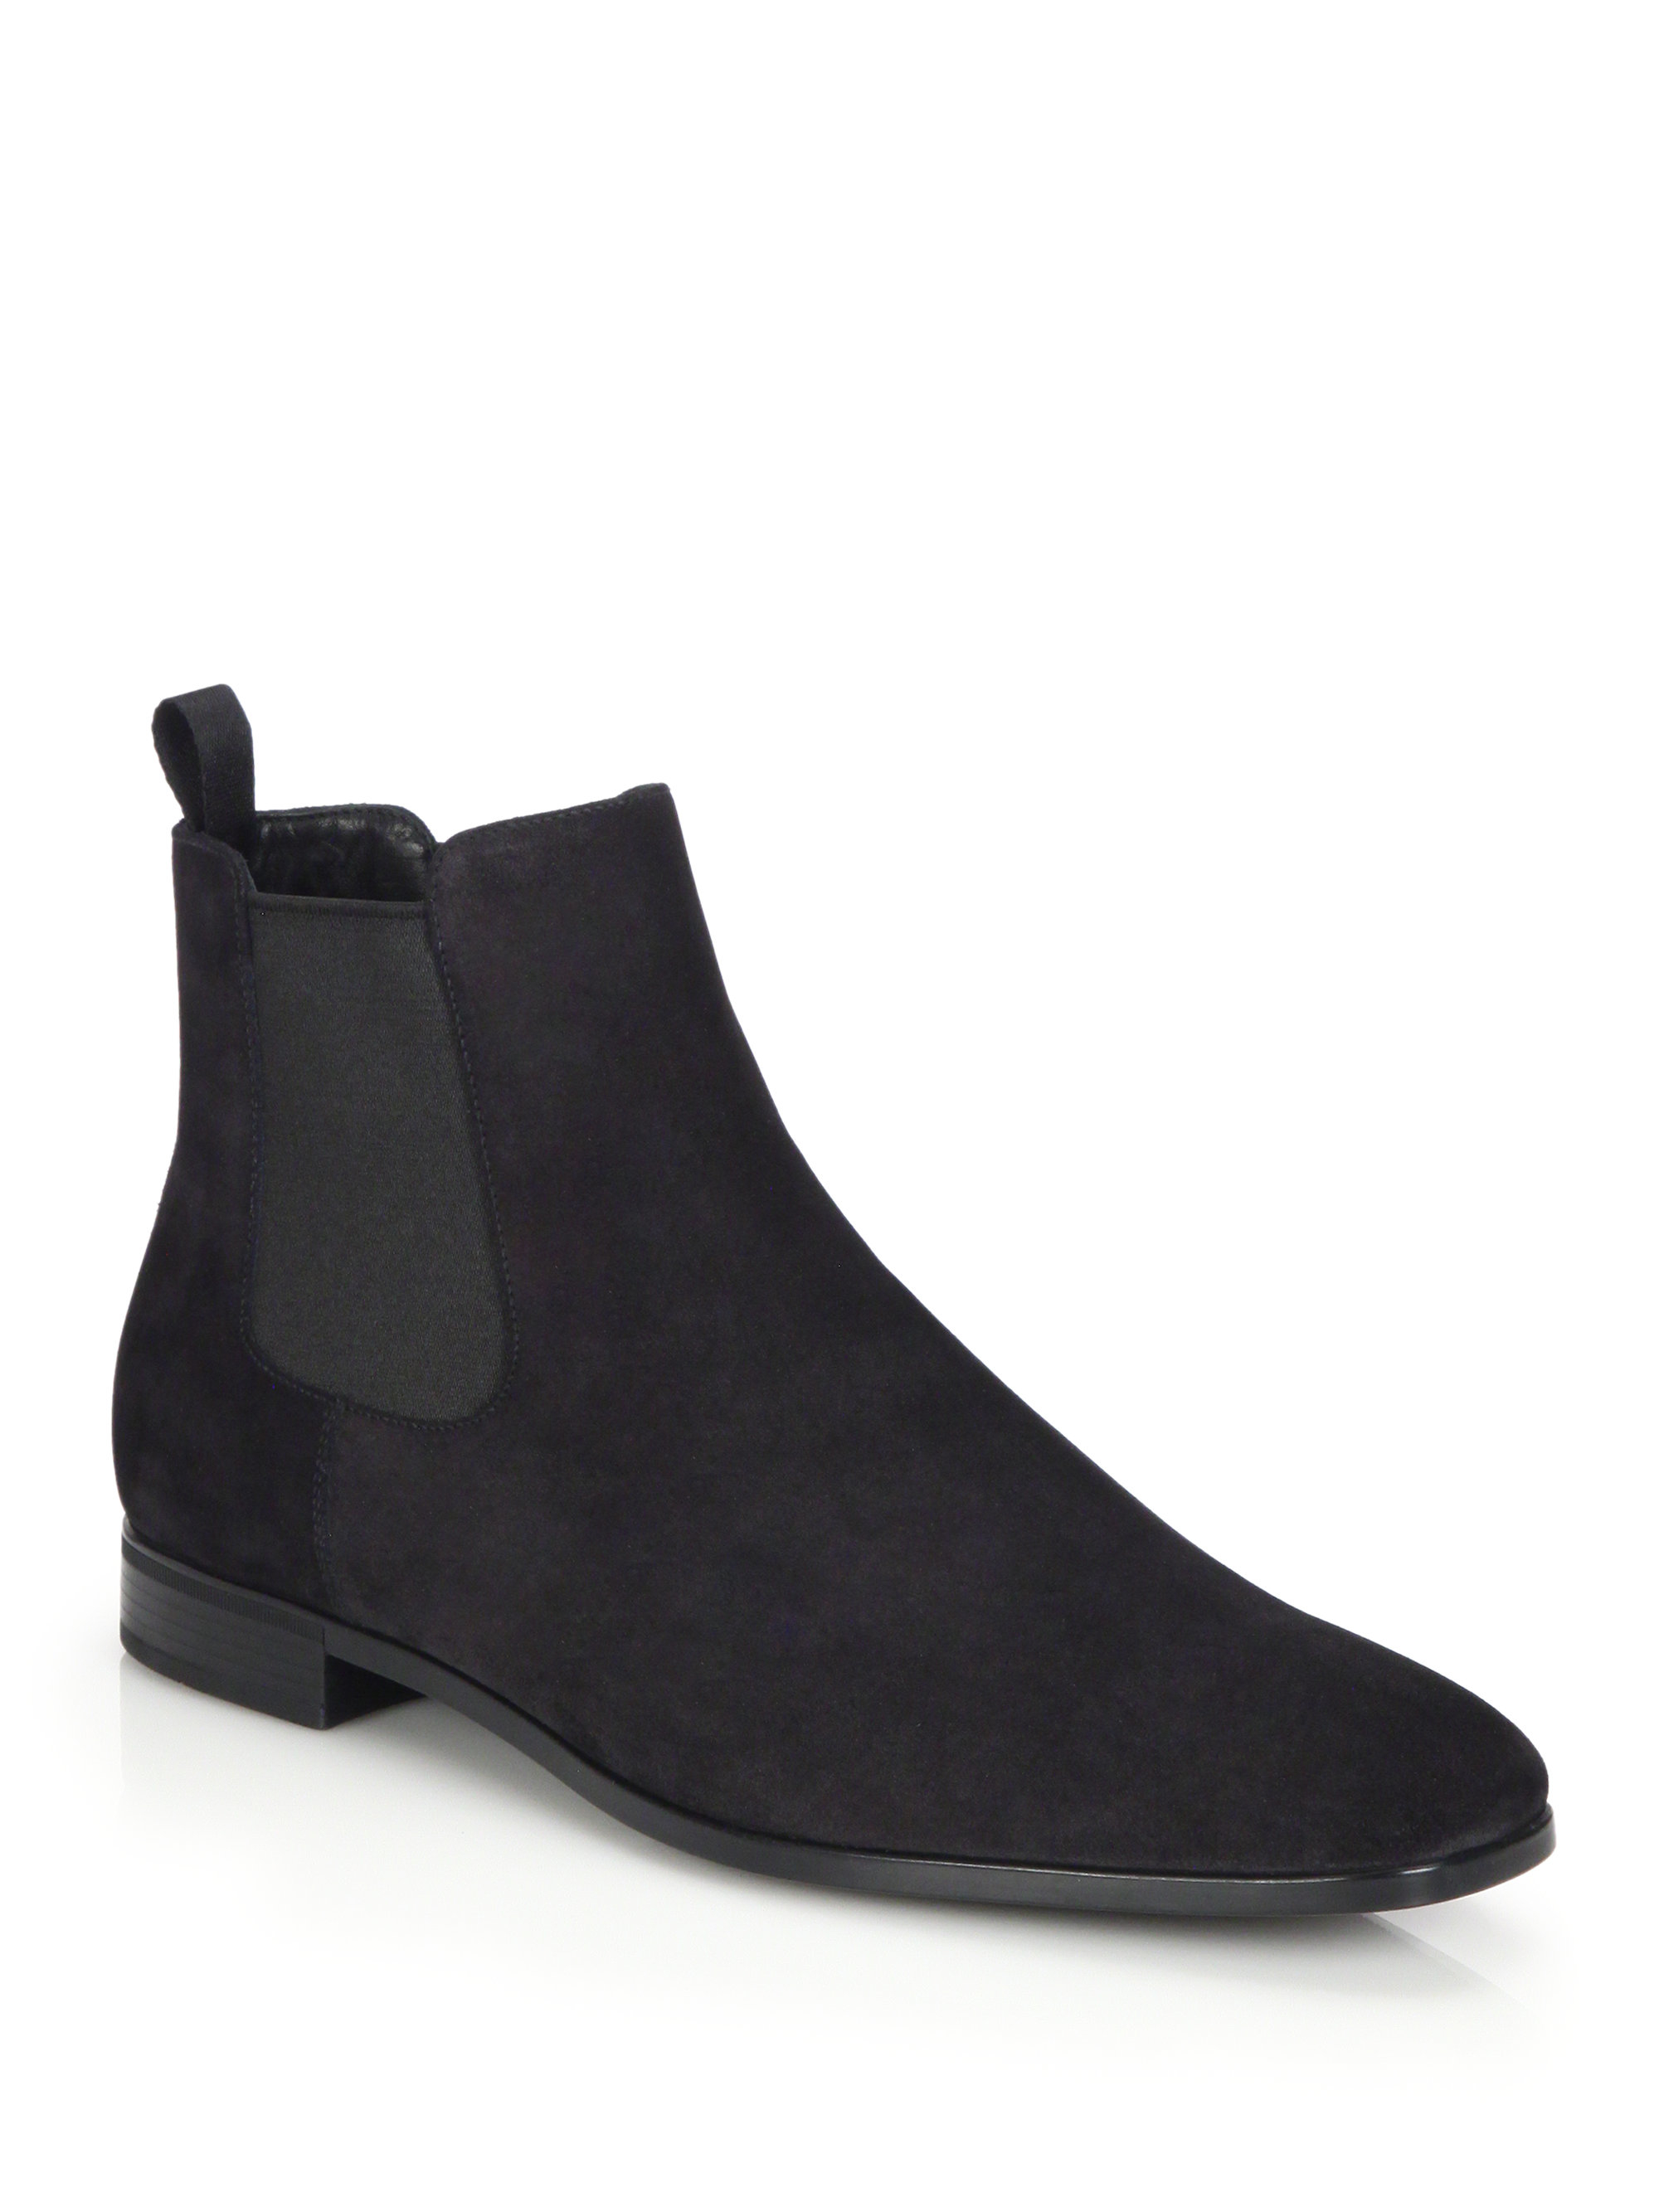 Prada Suede Chelsea Boots in Black for Men - Lyst